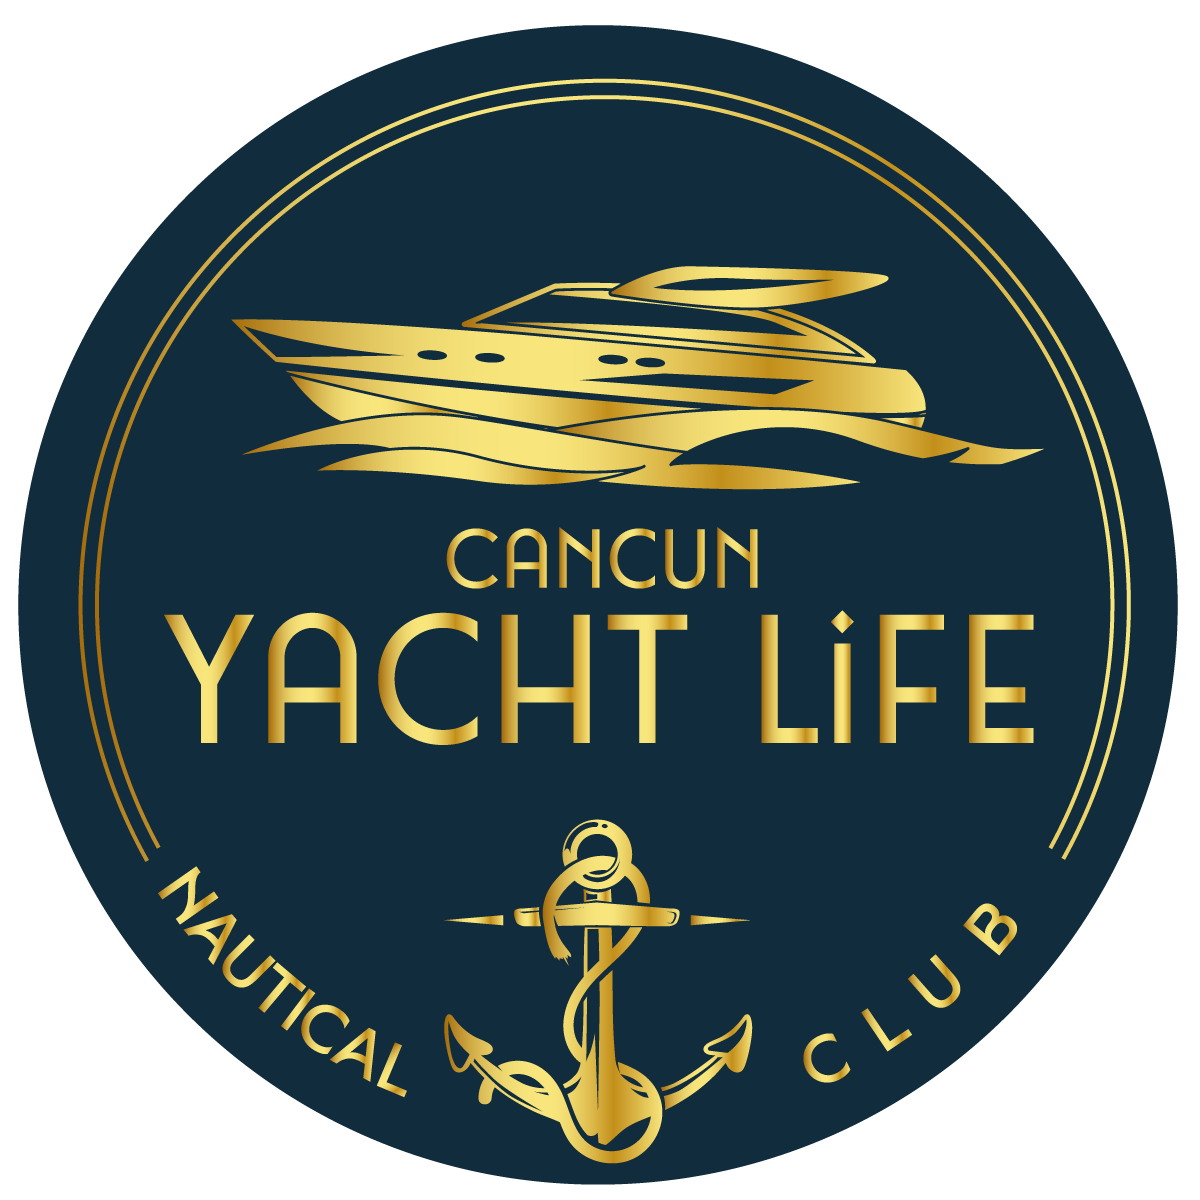 Cancun Yacht life logo_Mesa de trabajo 1